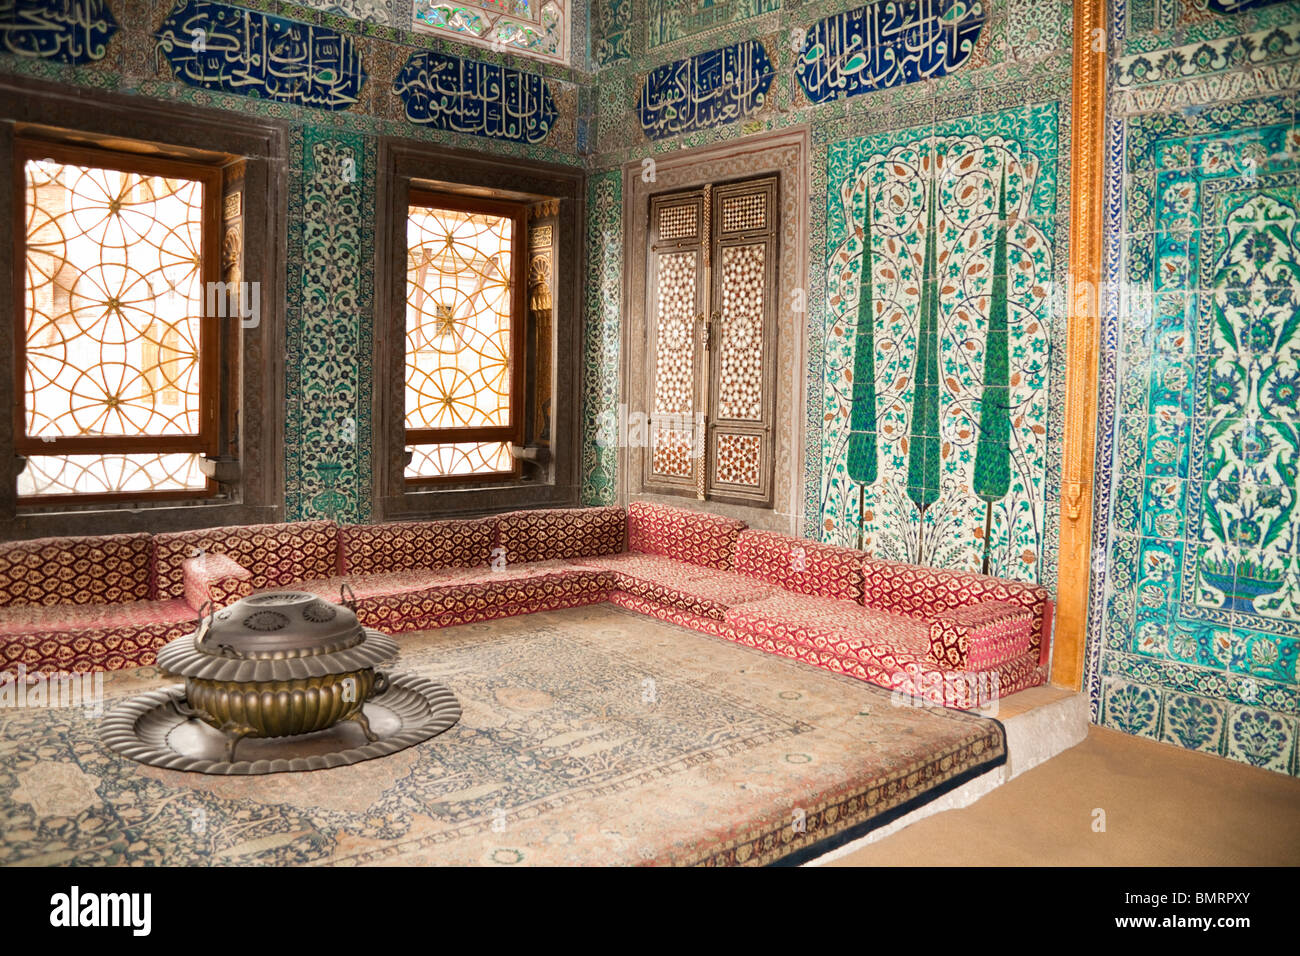 Topkapi Palace Harem Interior High Resolution Stock Photography And Images Alamy